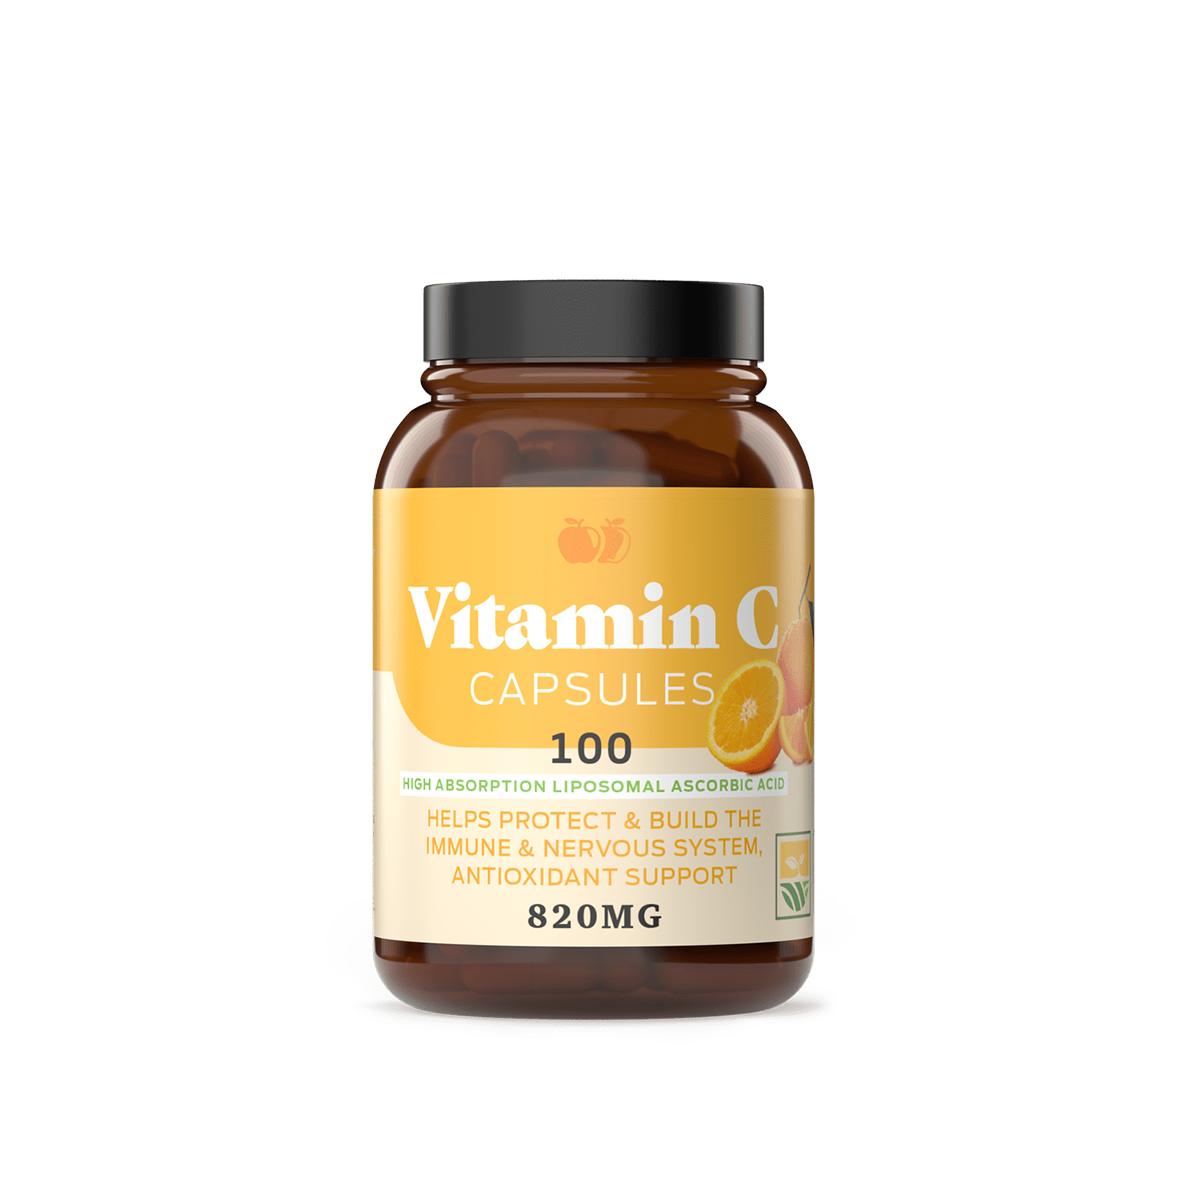 Liposomal Vitamin C Capsules